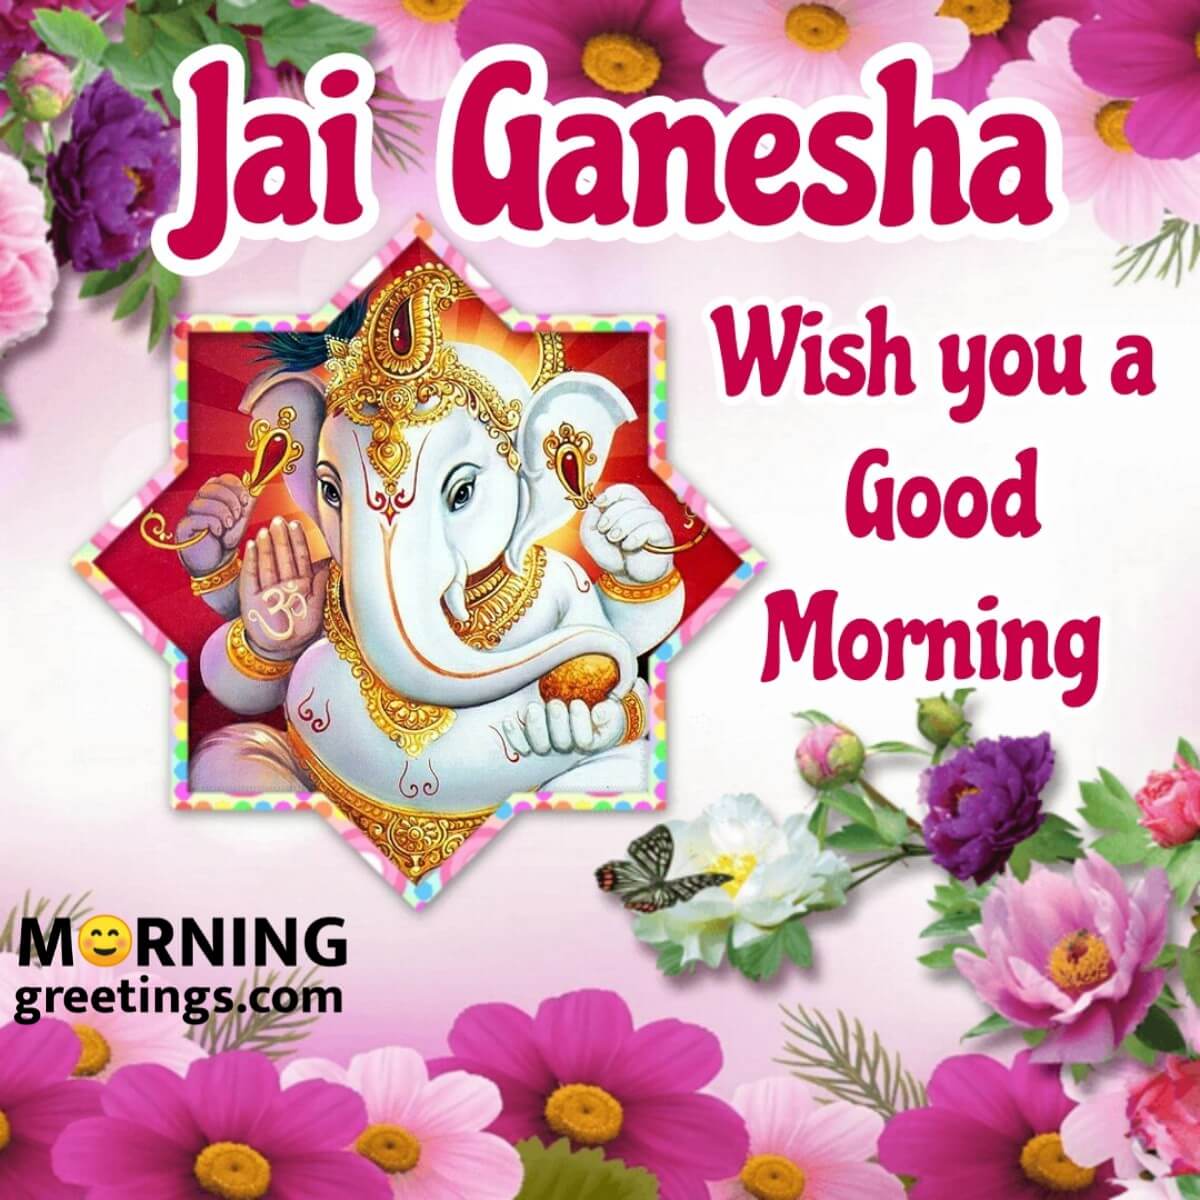 Jai Ganesha Wish You A Good Morning